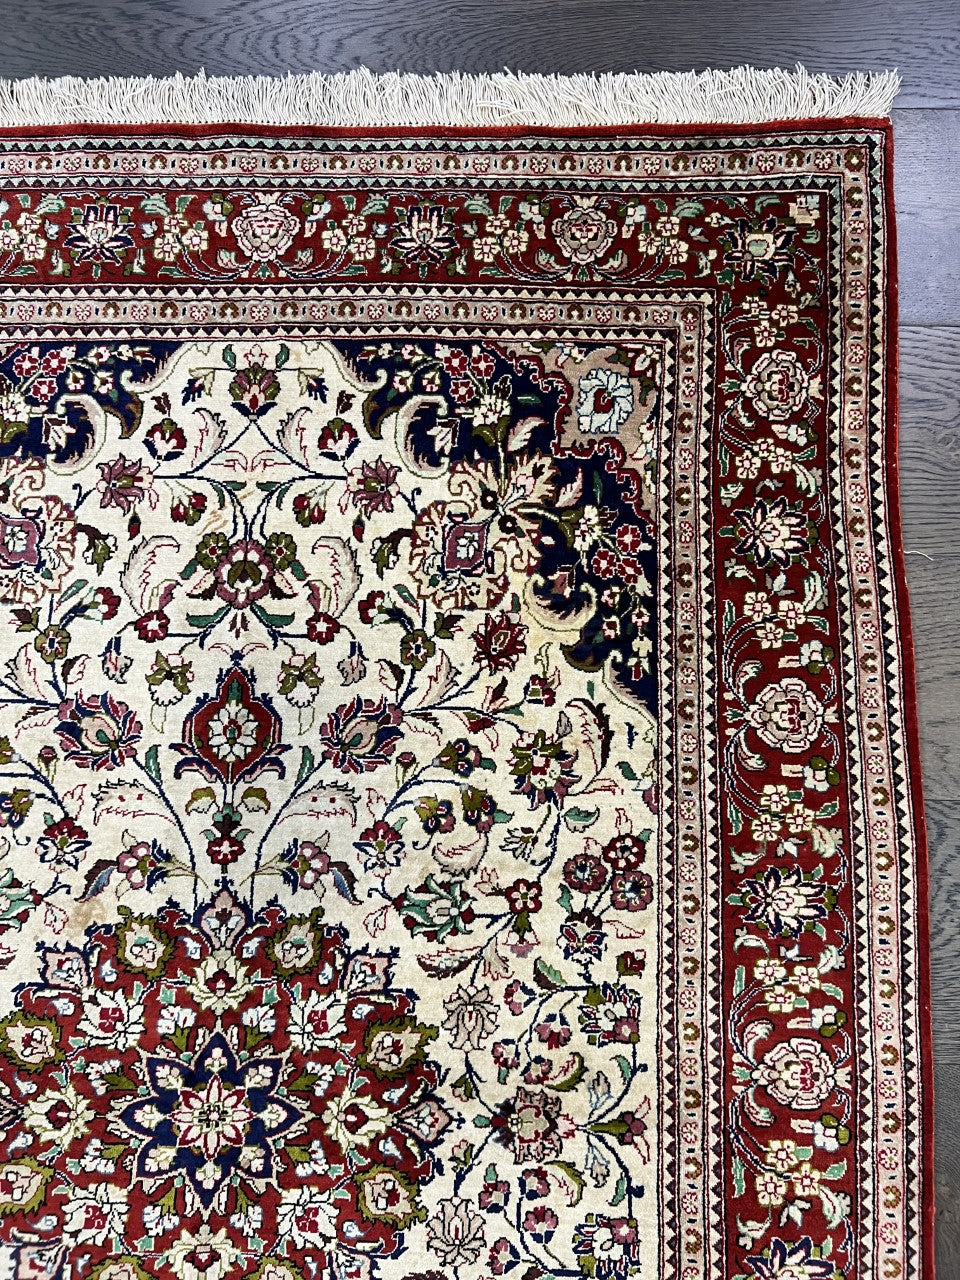 Wonderful vintage decorative Persian qom silk rug.